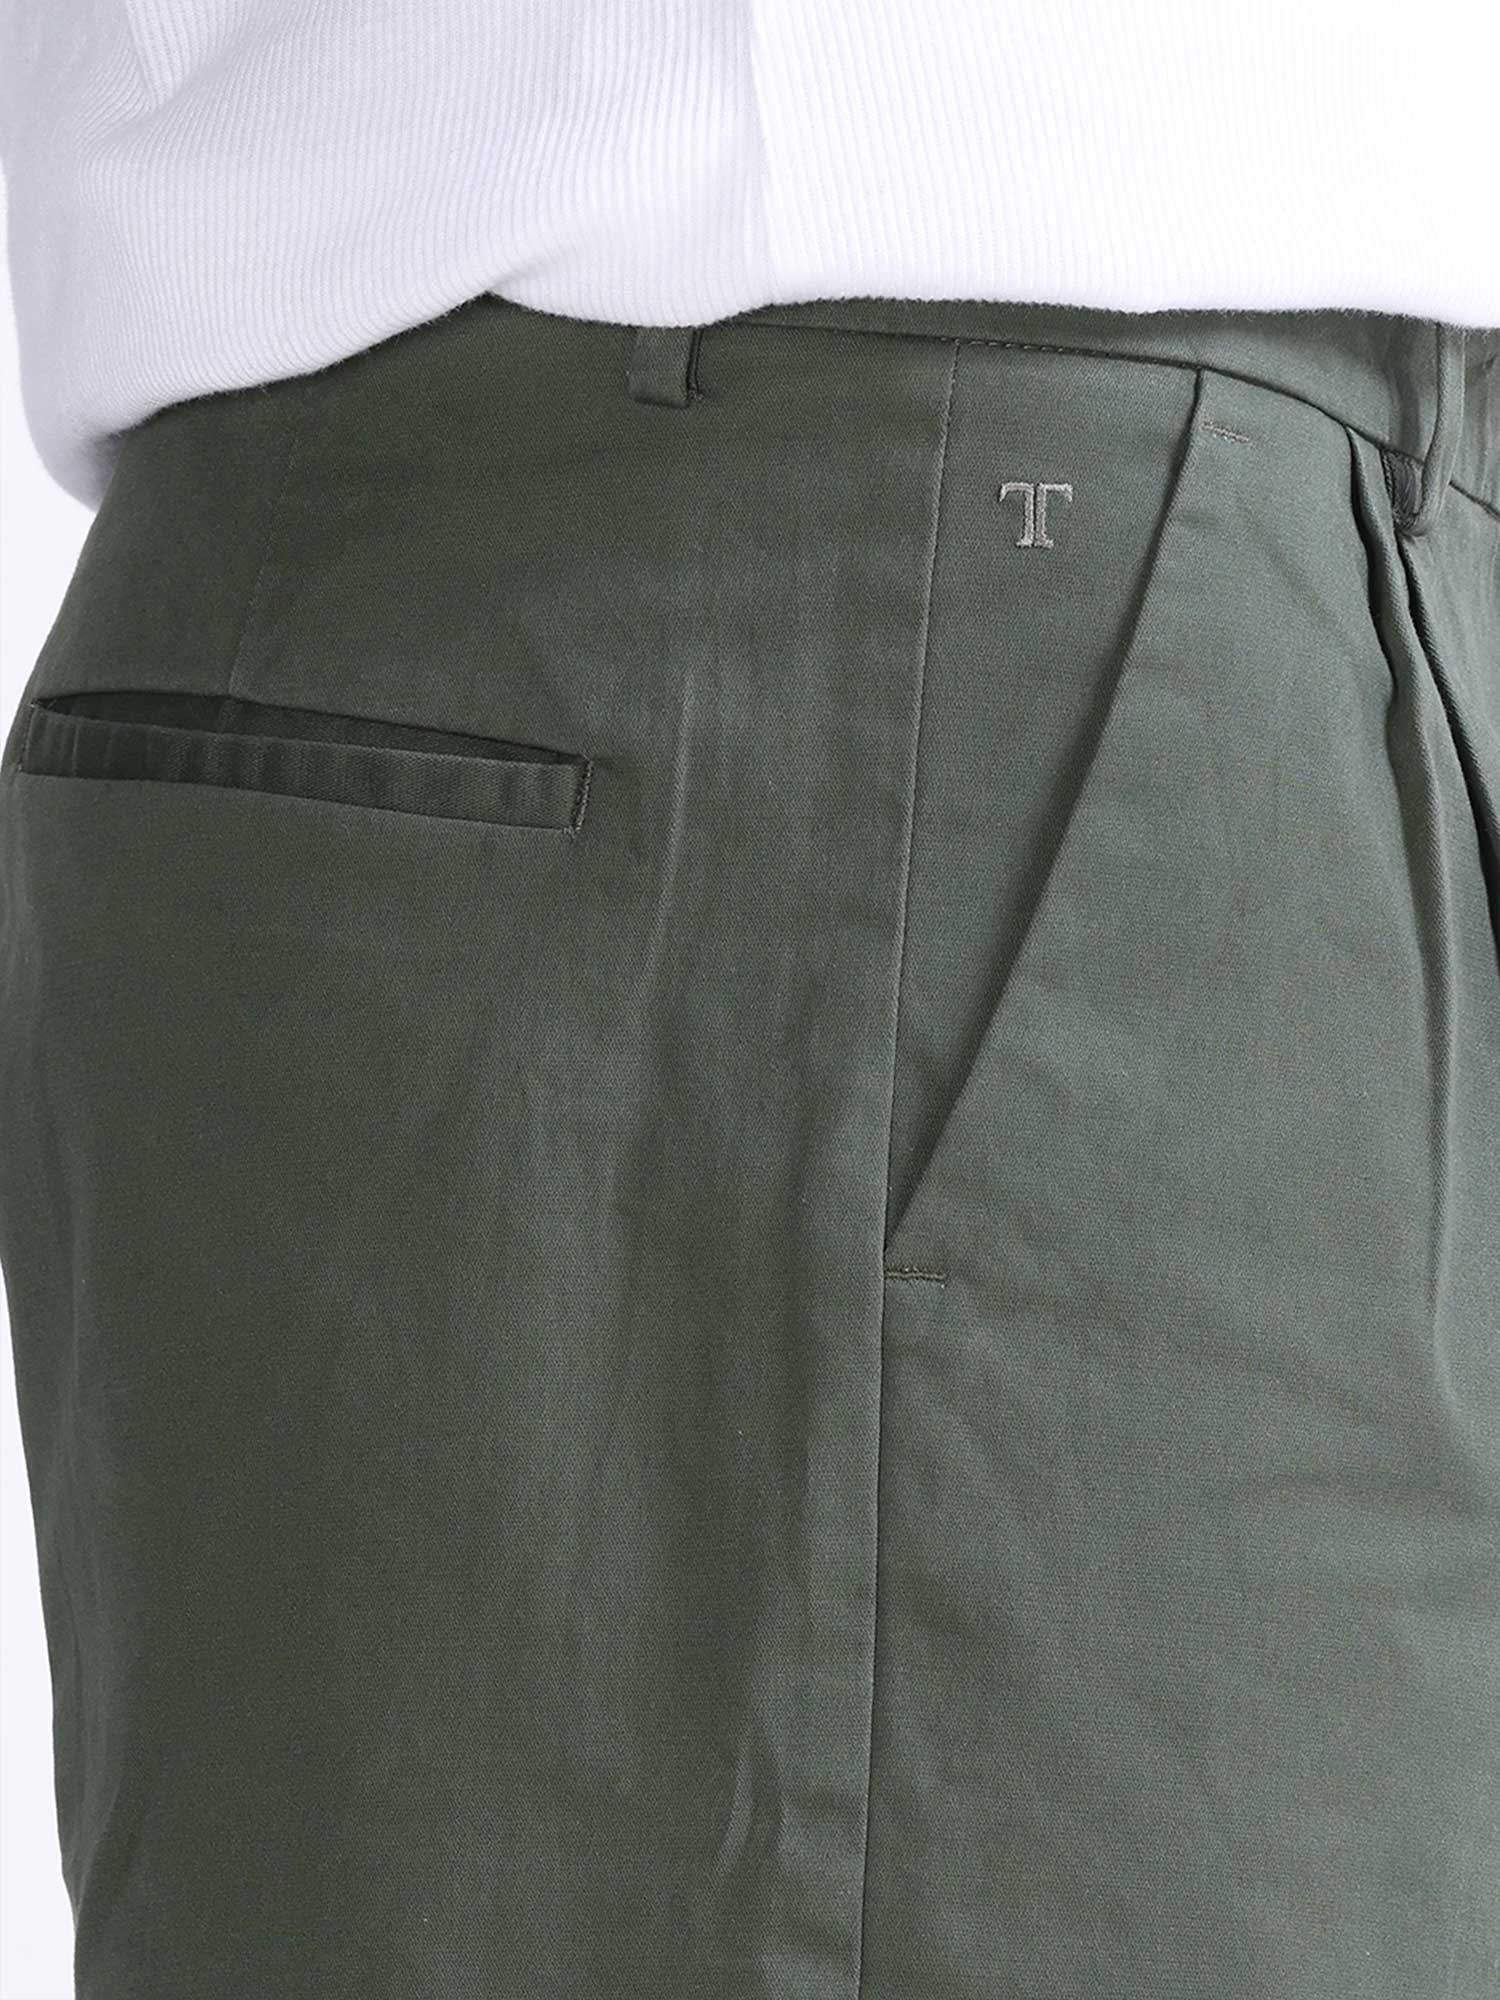 Lovskoo Men's Corduroy Pants Flat-Front Casual Straight Trousers Elastic  Slim Cotton Pants Olive Green - Walmart.com